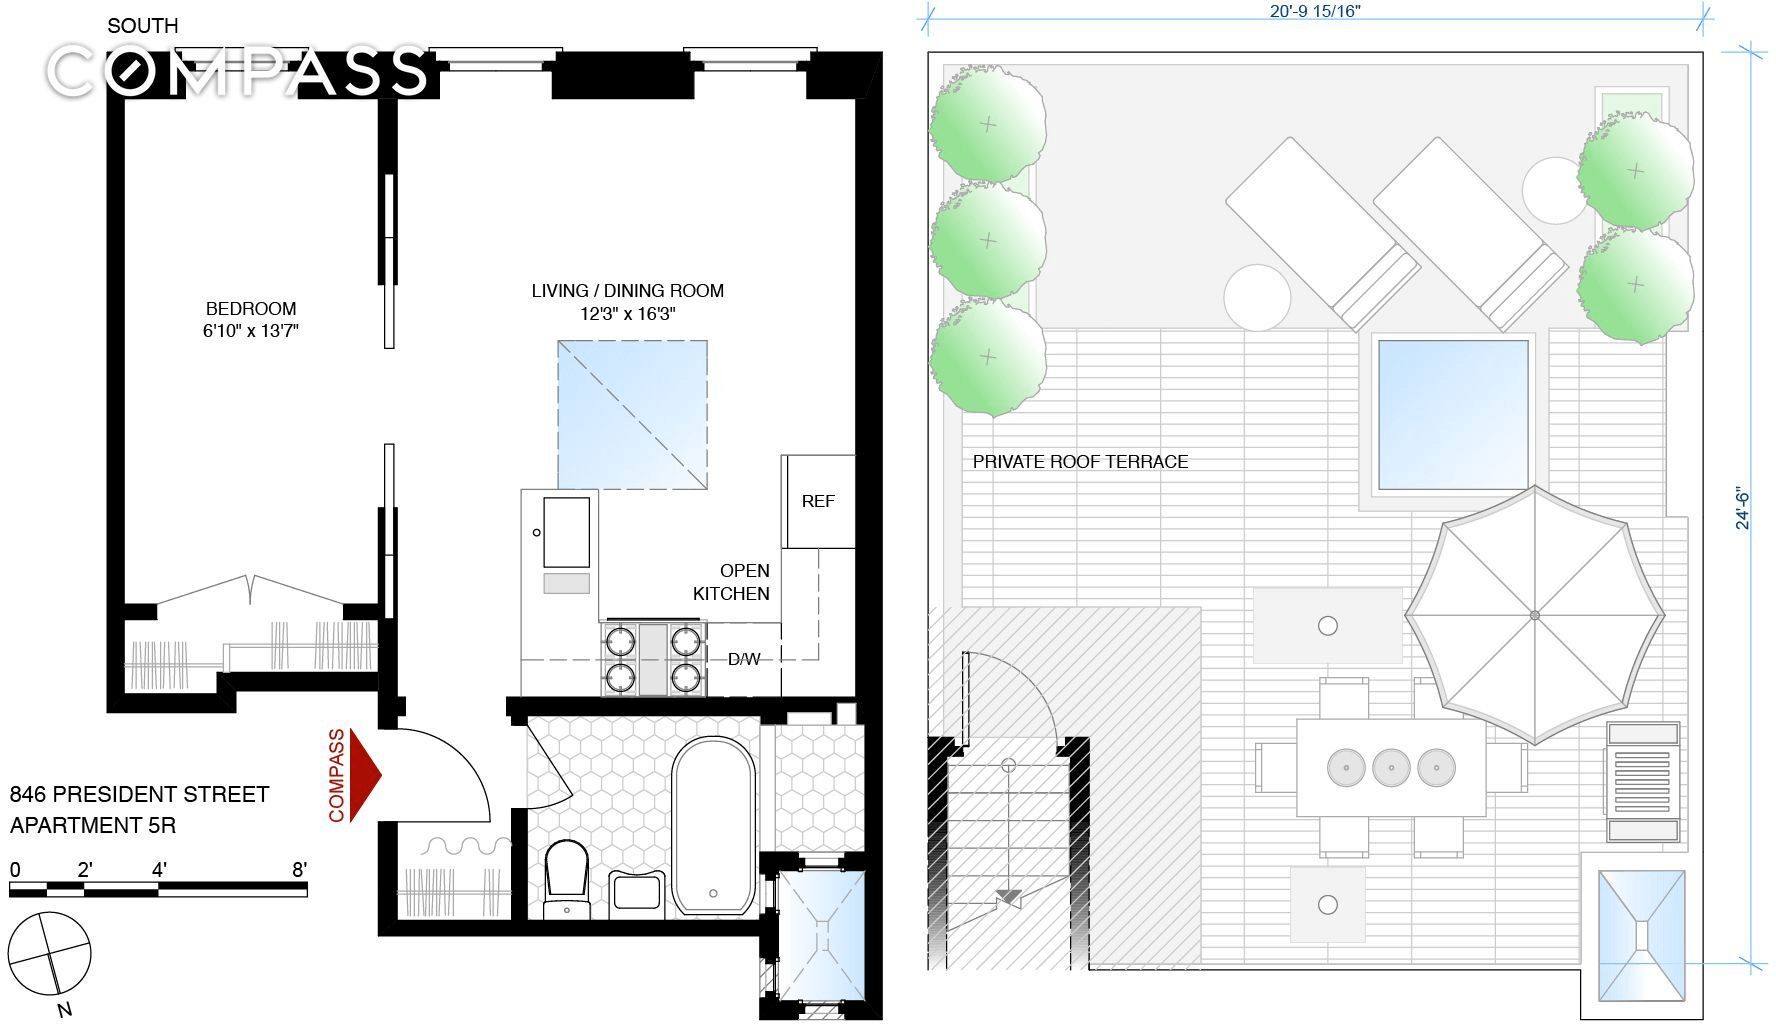 floorplan of 846 president street unit 5r